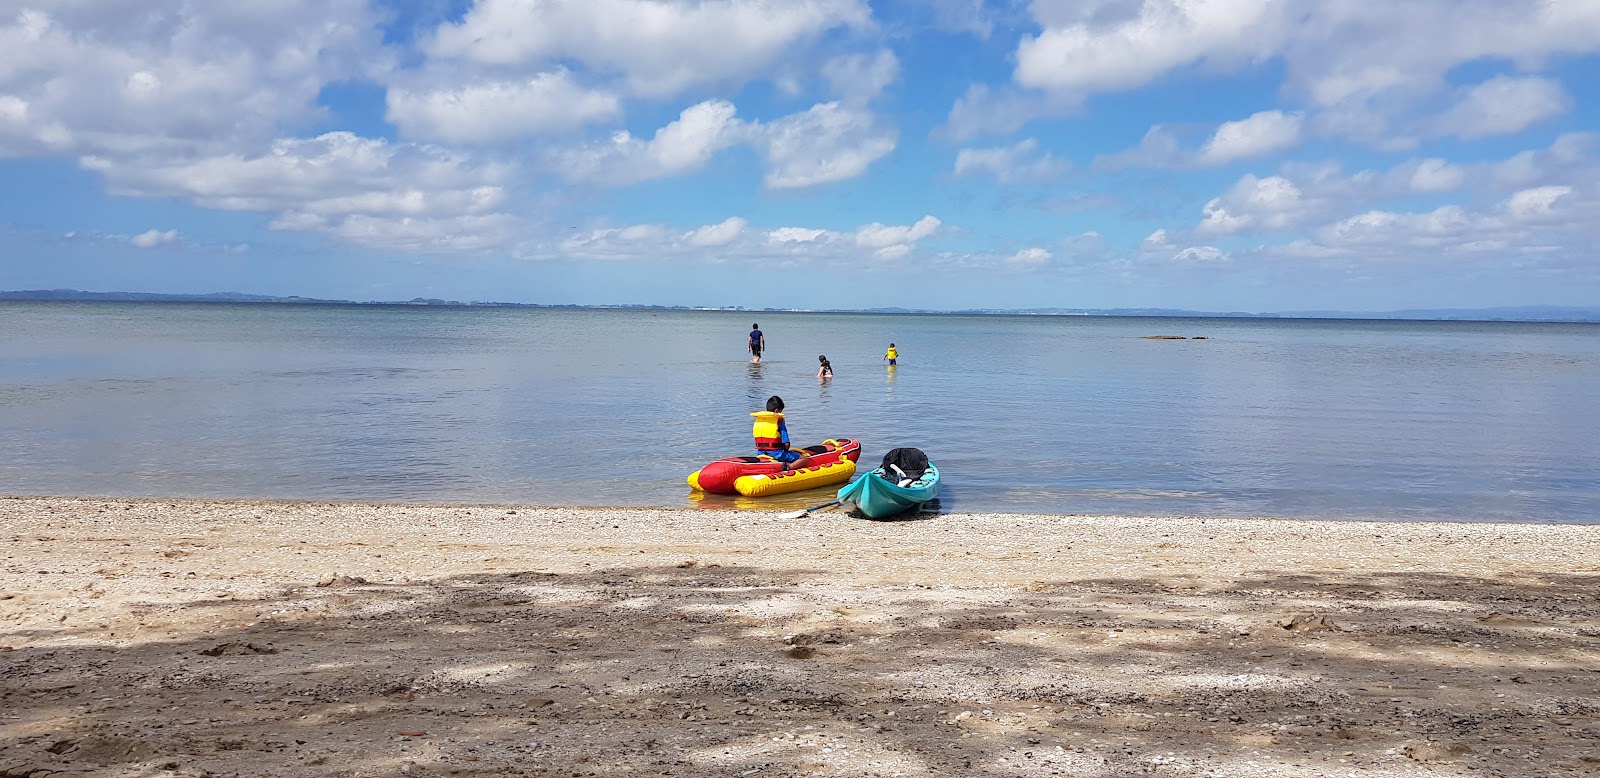 Fotografie cu Matakawau Beach - locul popular printre cunoscătorii de relaxare